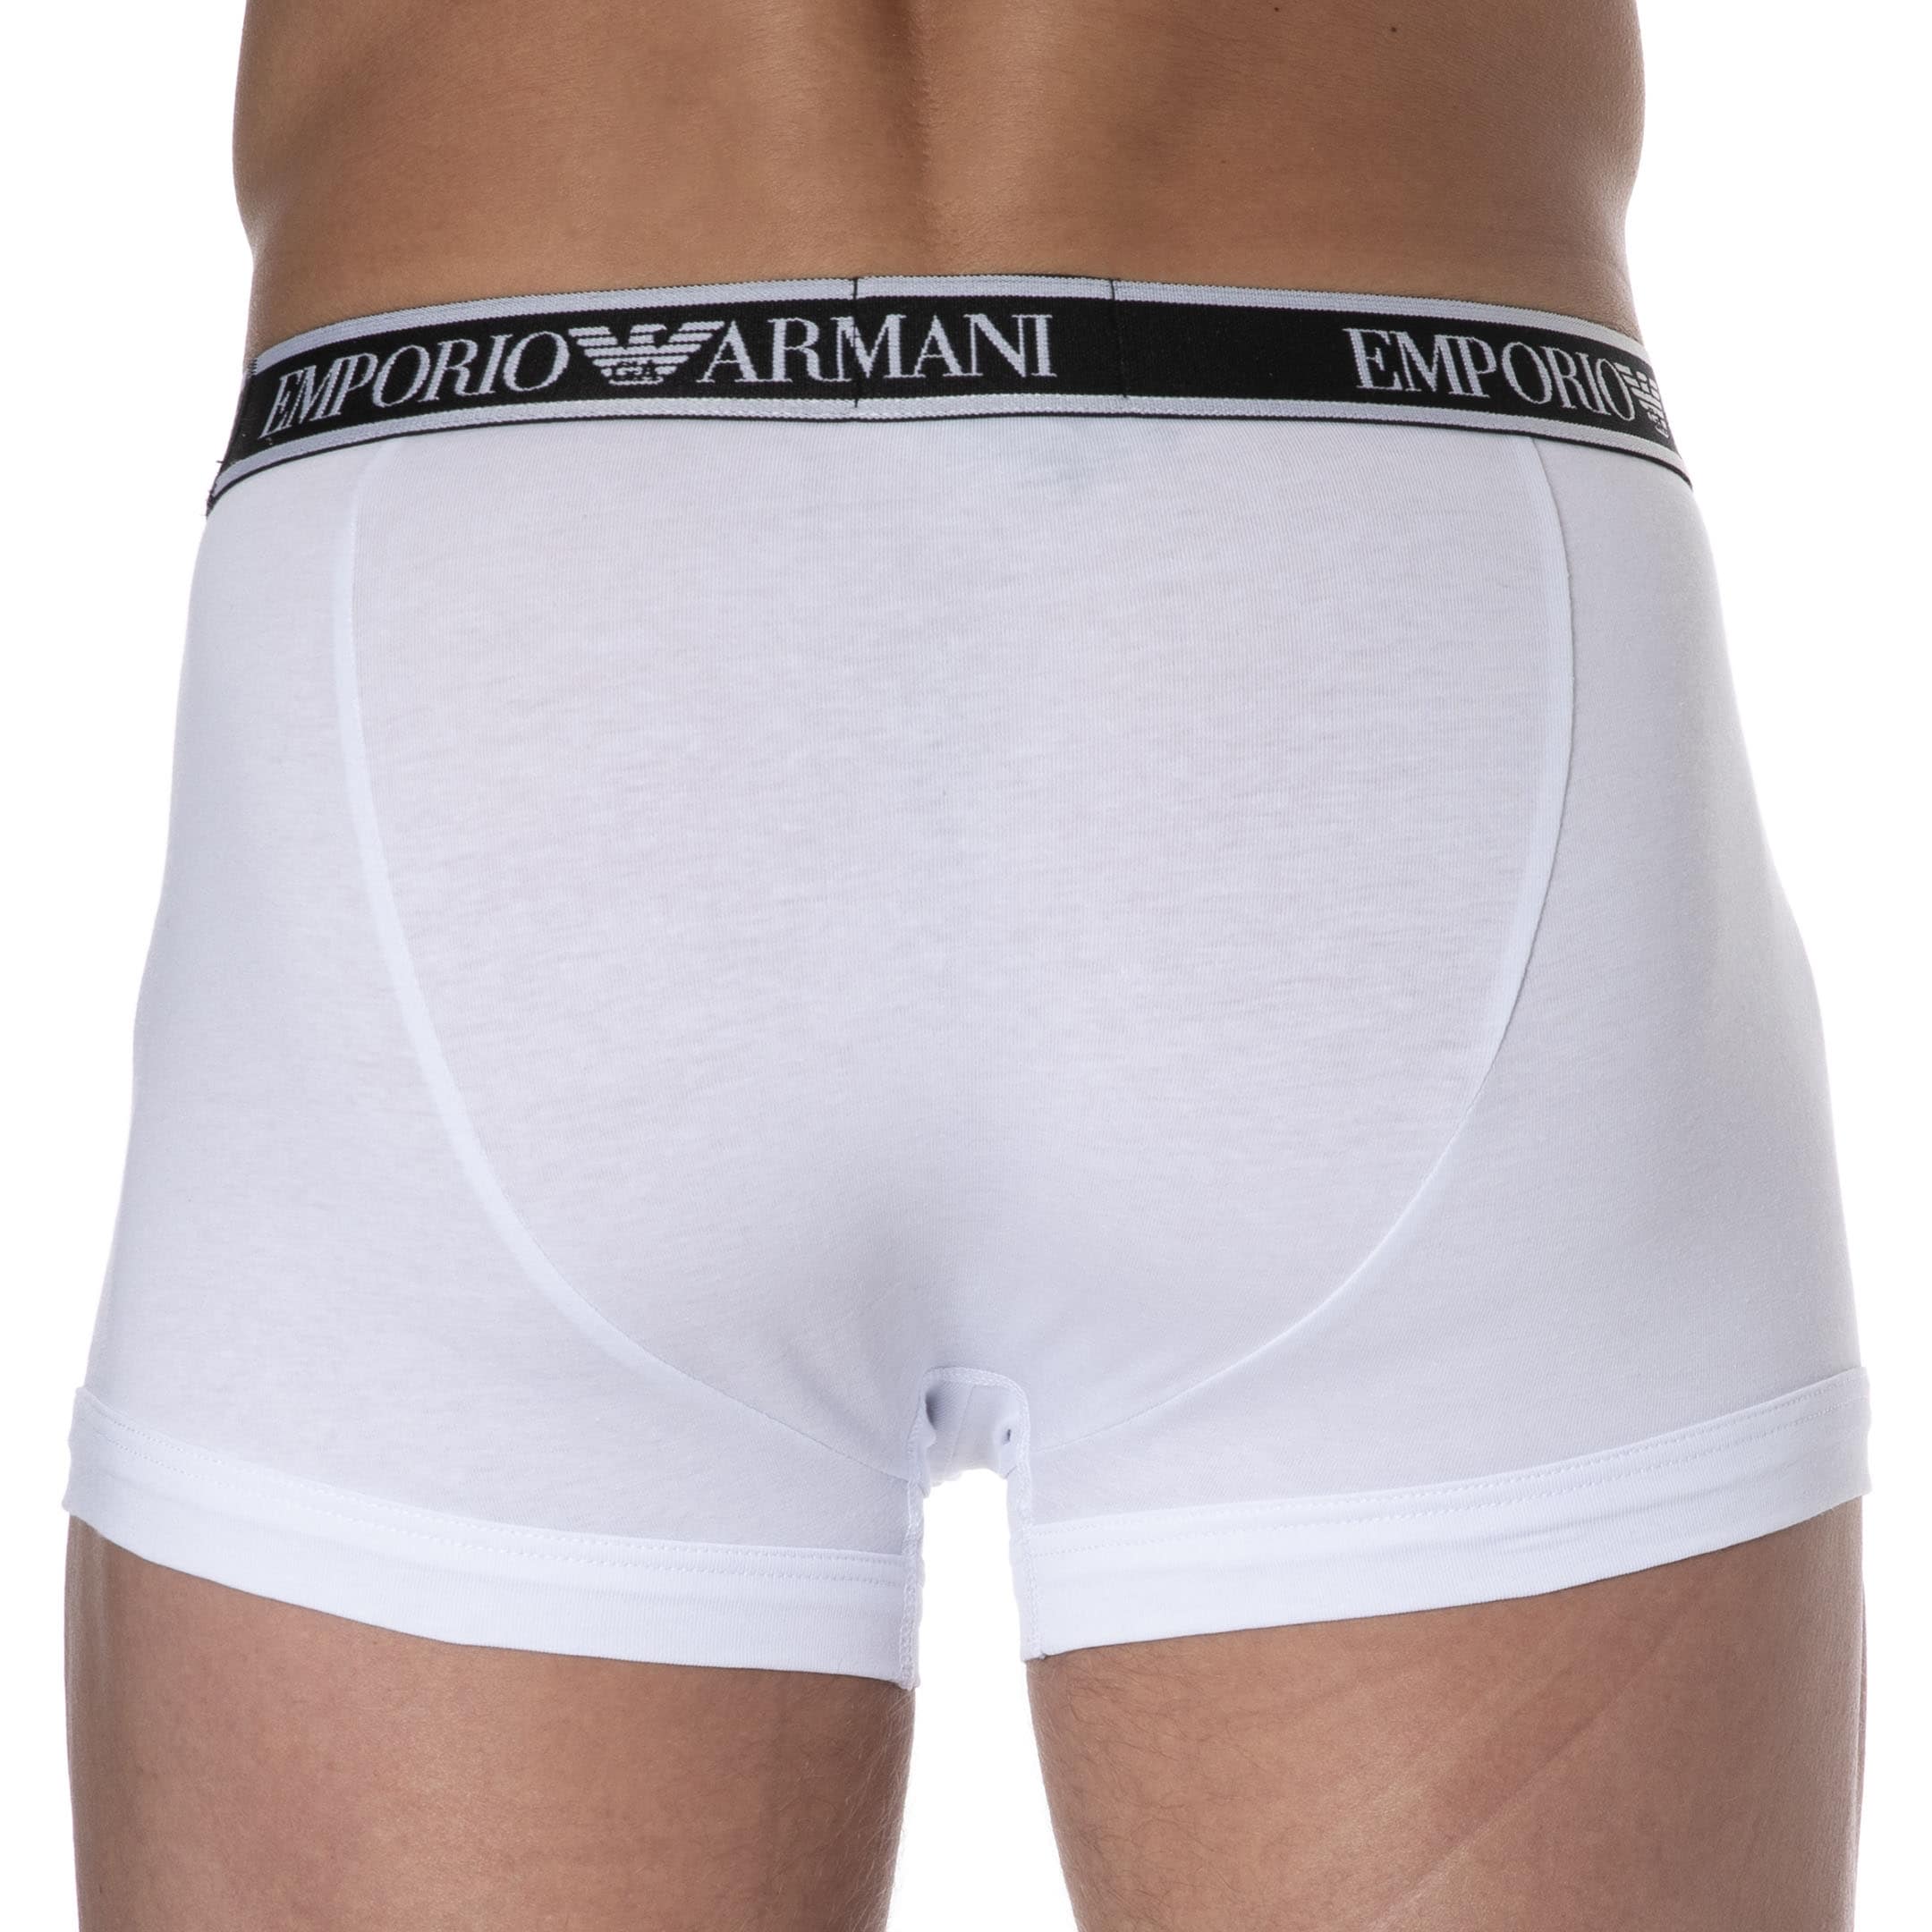 Emporio Armani 111357 96535 3/PK BOXER - Underwear from Jonathan